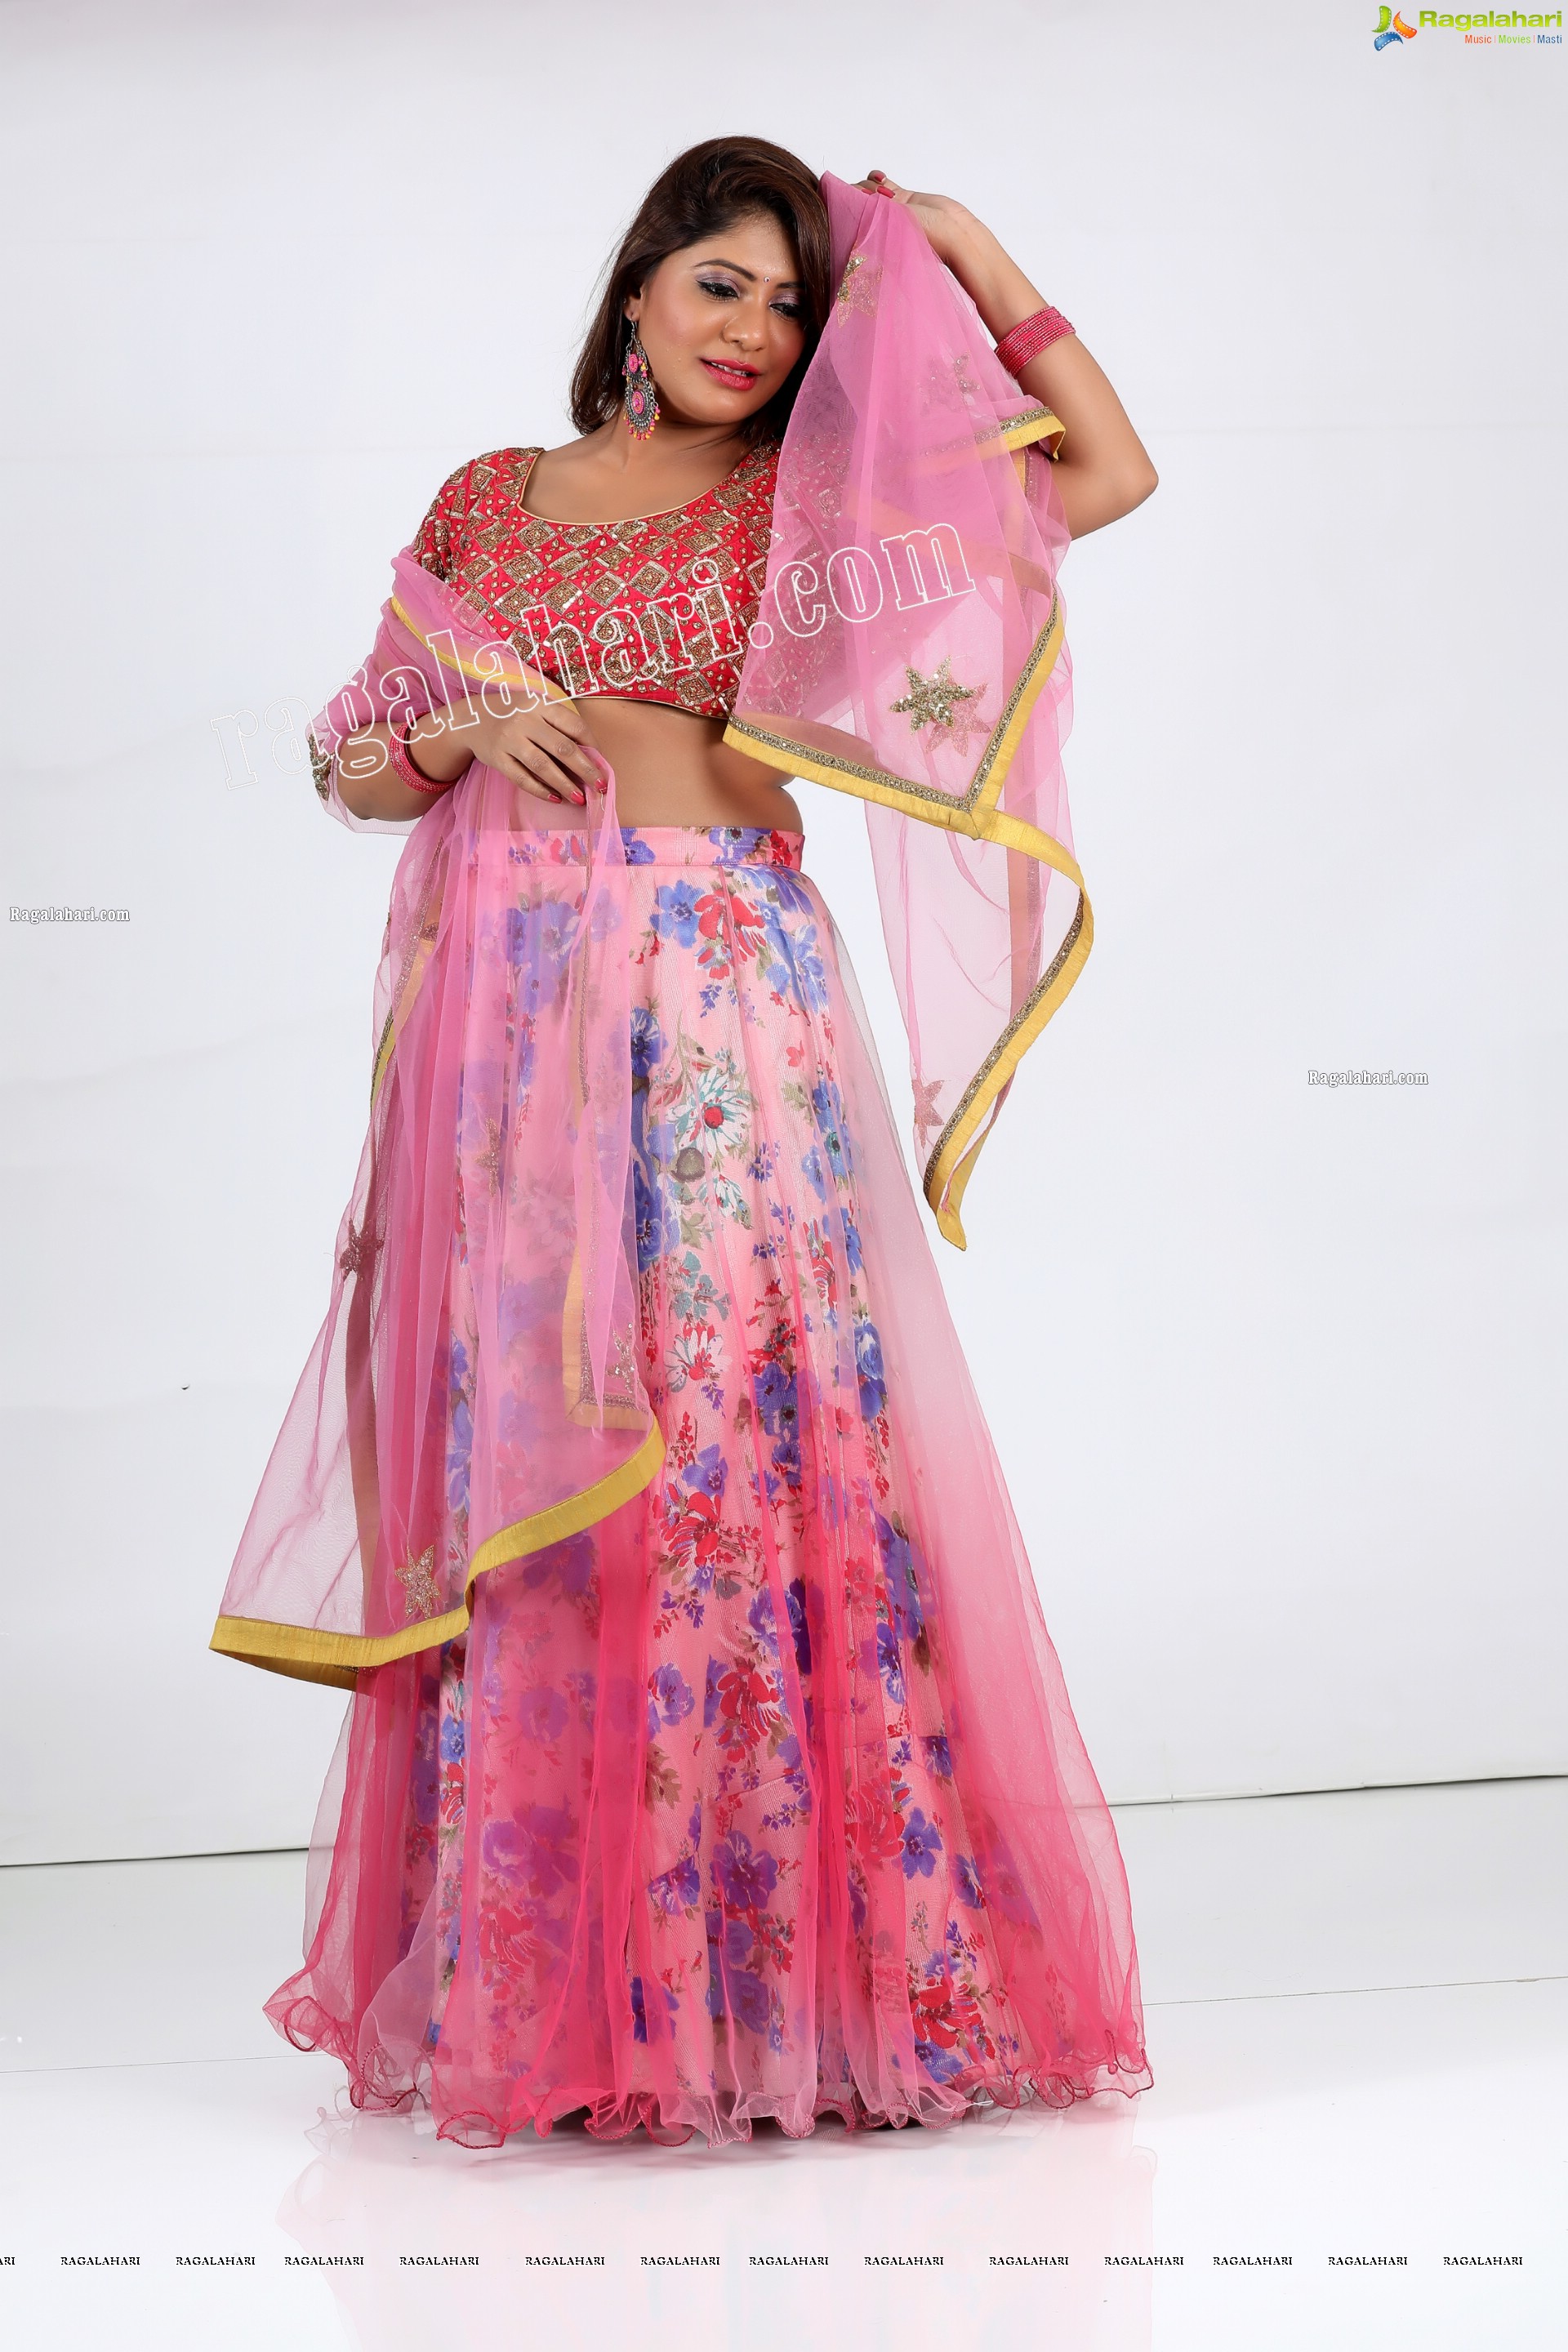 Sejal Mandavia in Pink Floral Lehenga Choli Exclusive Photo Shoot